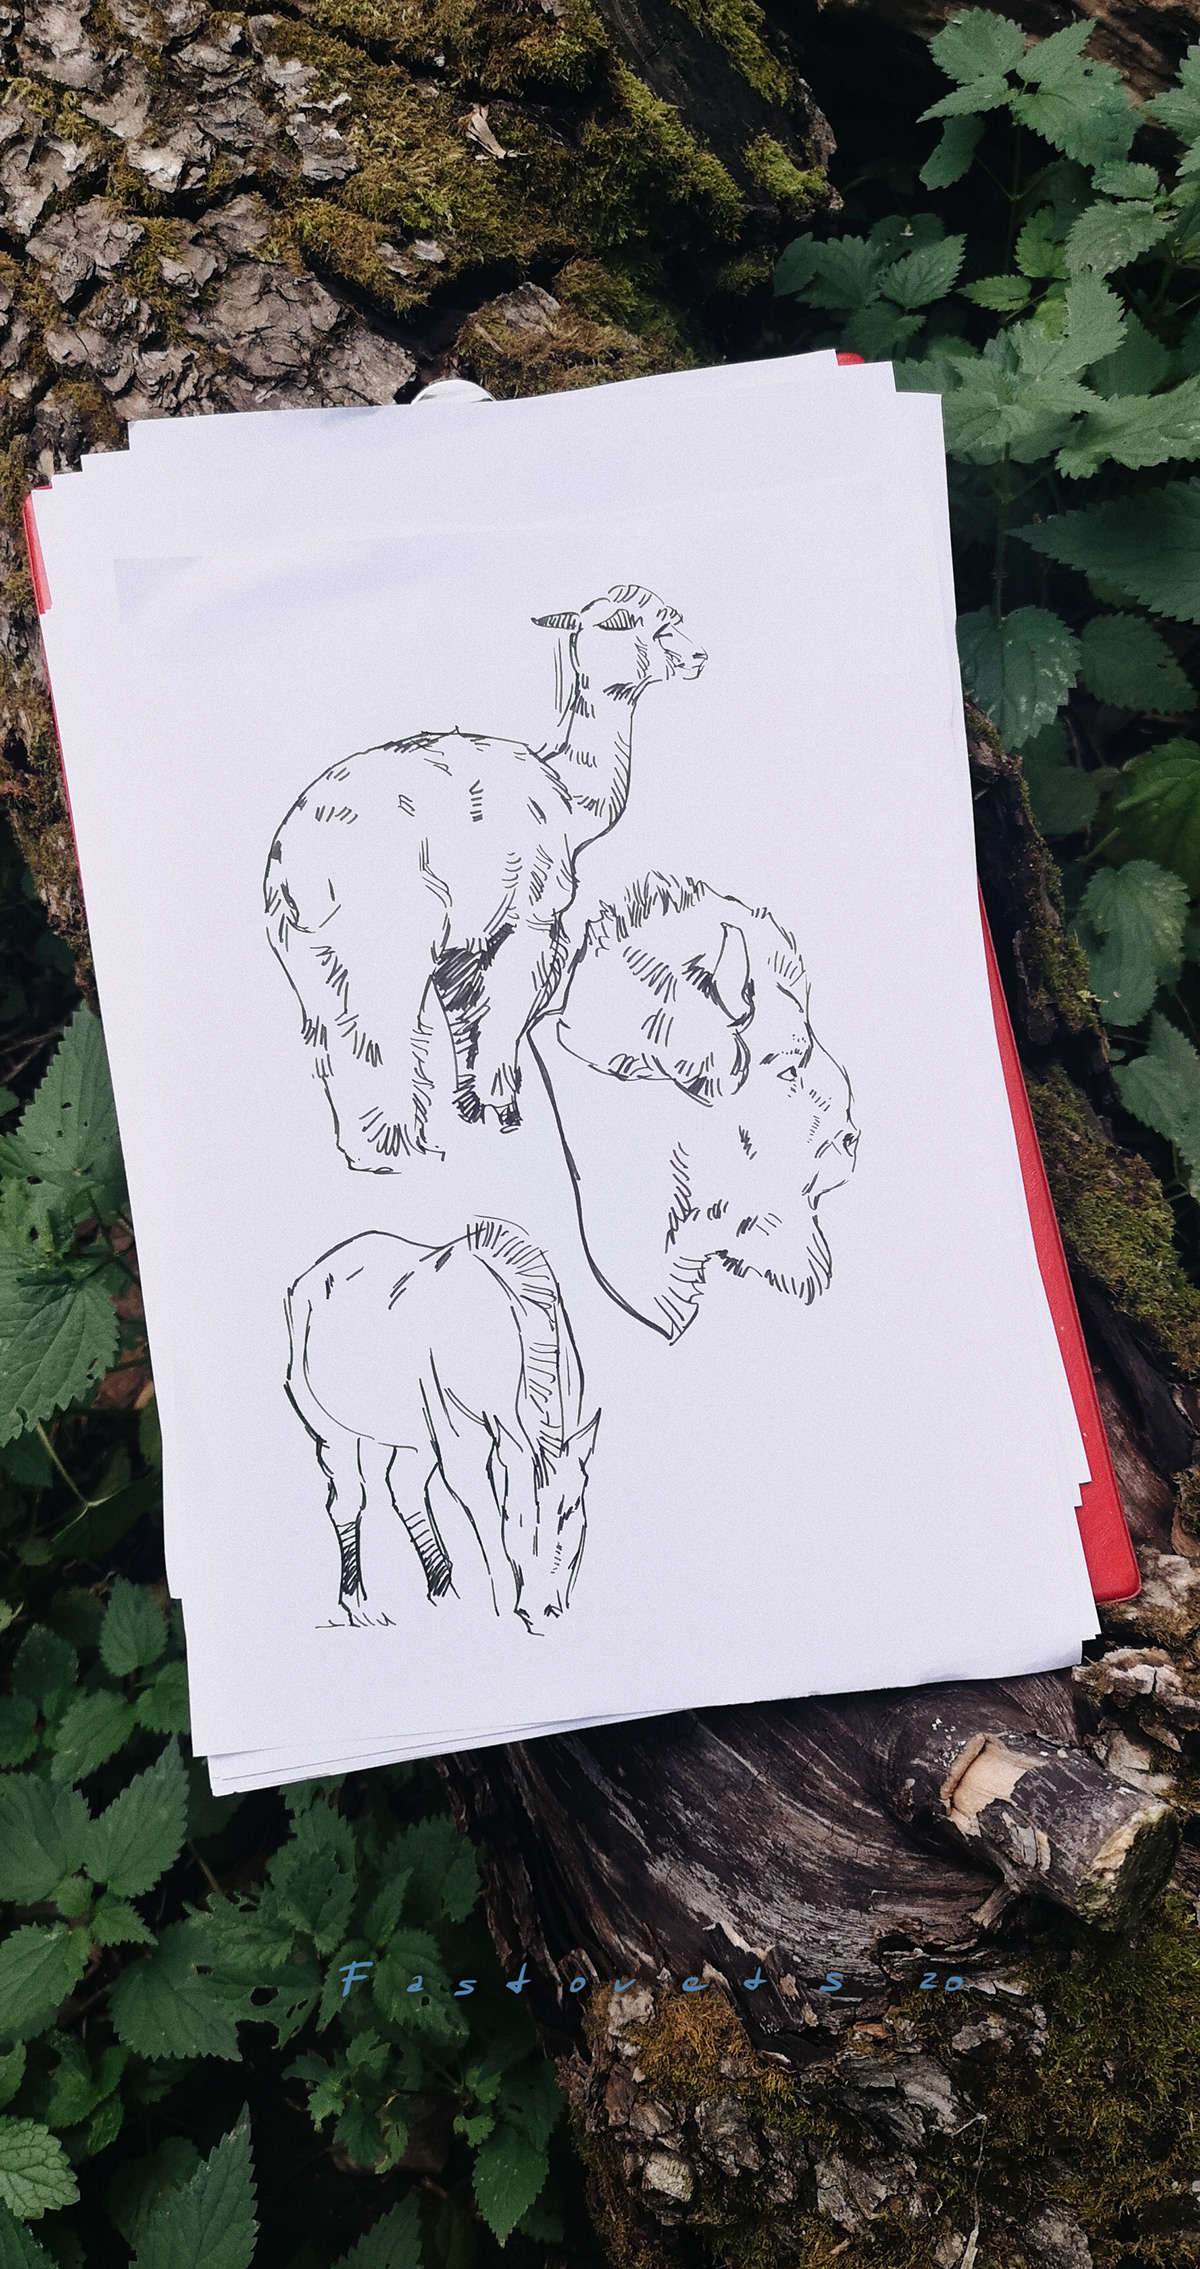 animals sketches